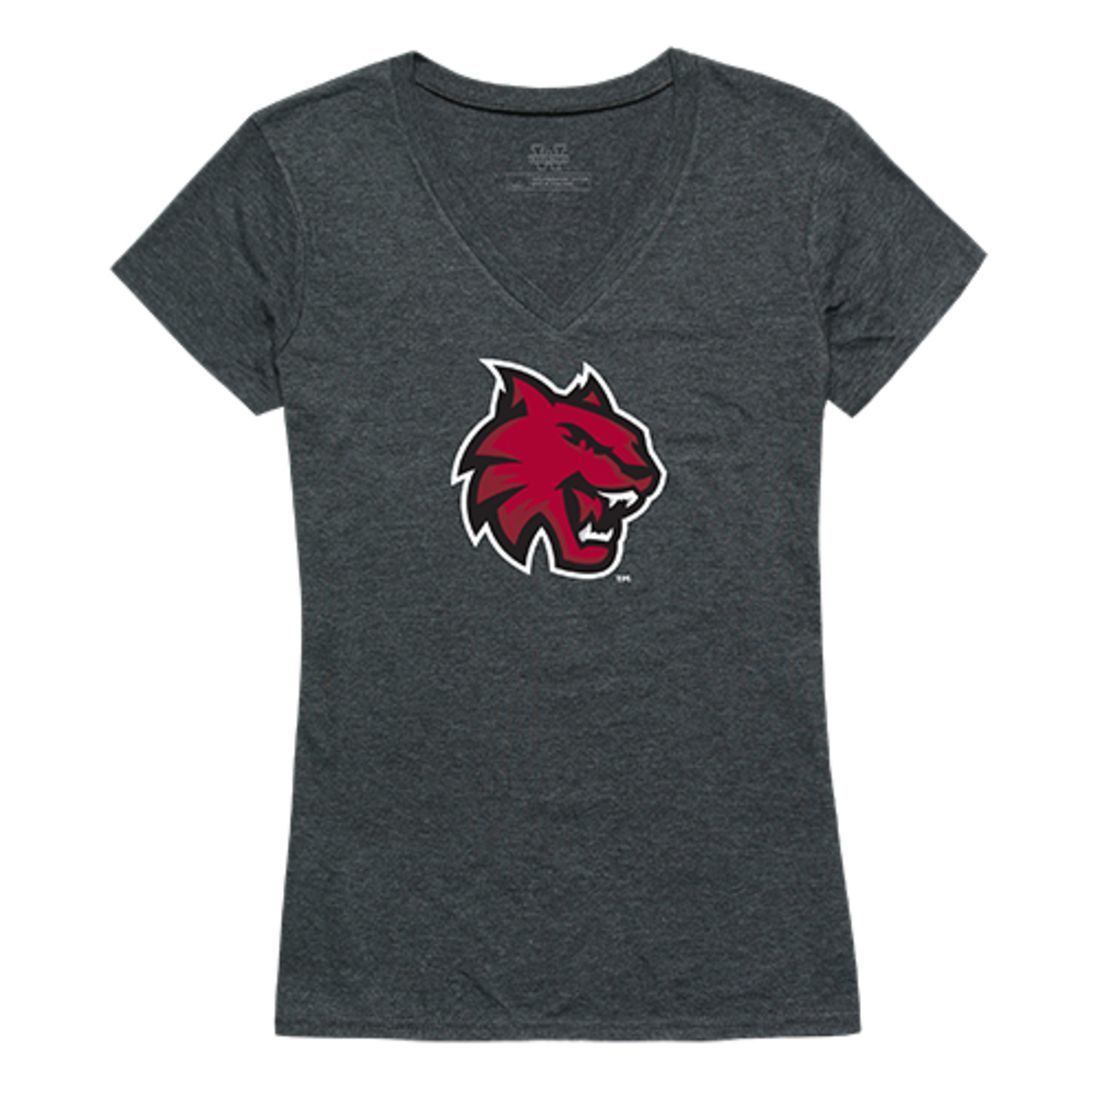 CWU Central Washington University Wildcats Womens Cinder Tee T-Shirt Heather Charcoal-Campus-Wardrobe